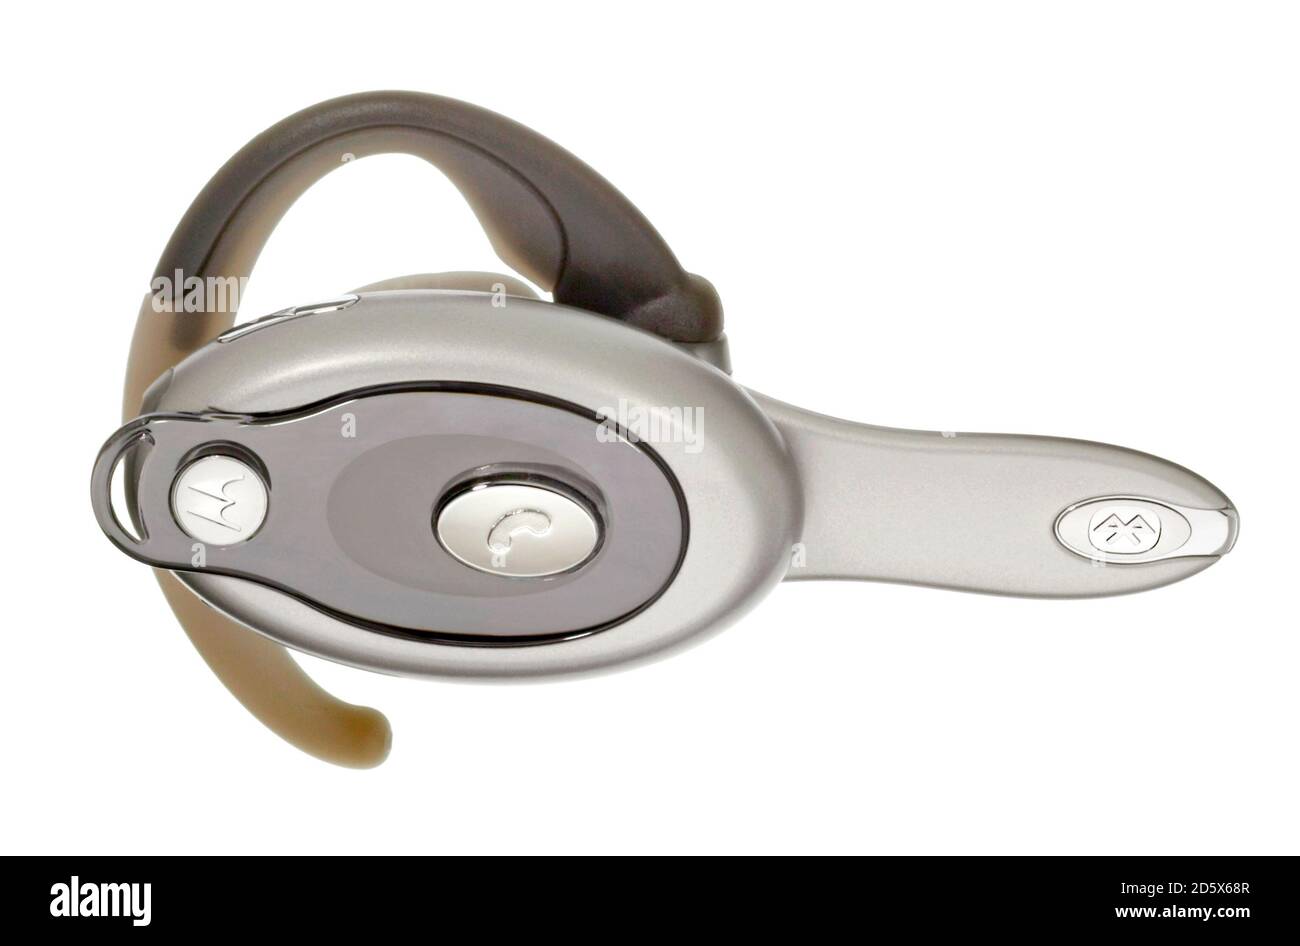 Auricolare Bluetooth Motorola grigio fotografato su sfondo bianco Foto  stock - Alamy